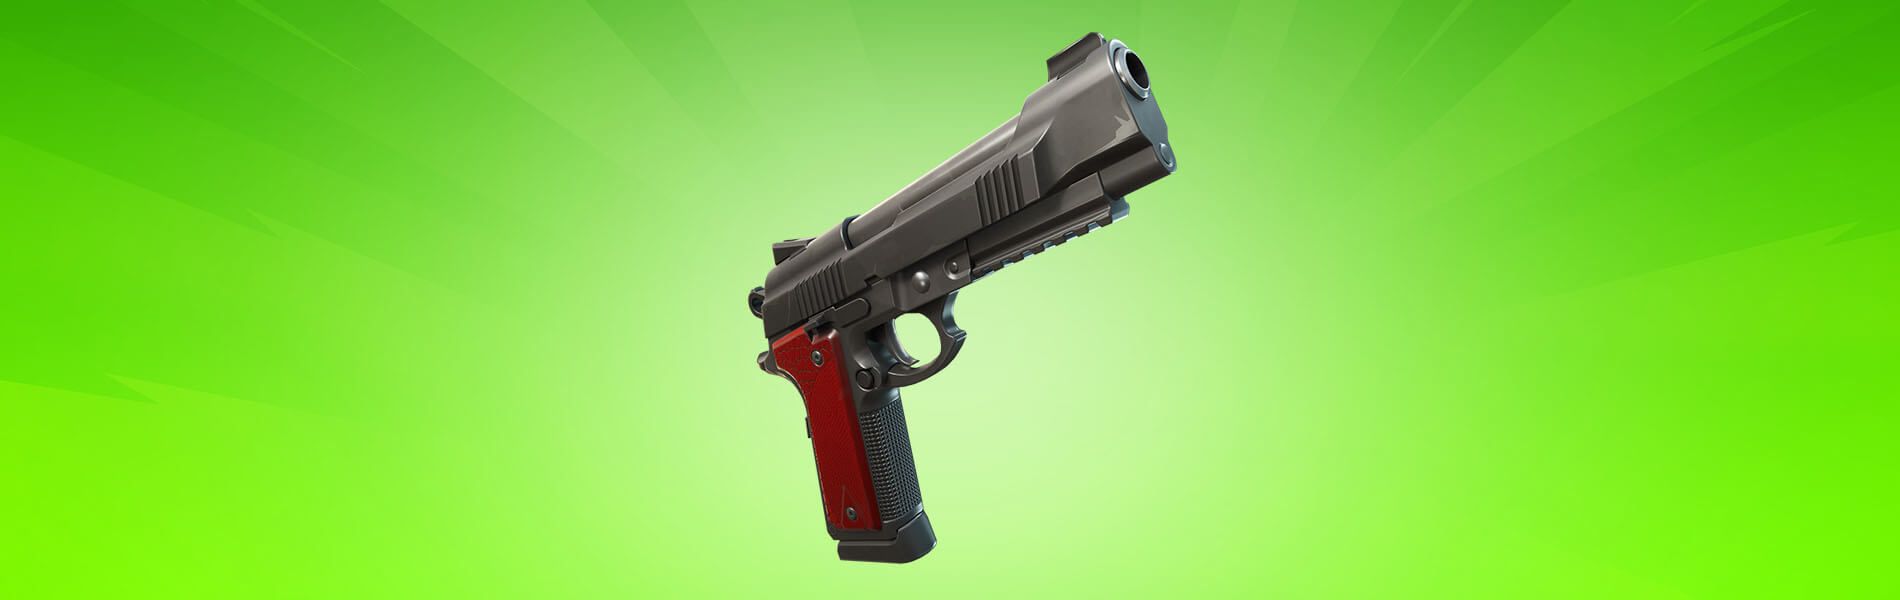 fortnite sidearm pistol new guns